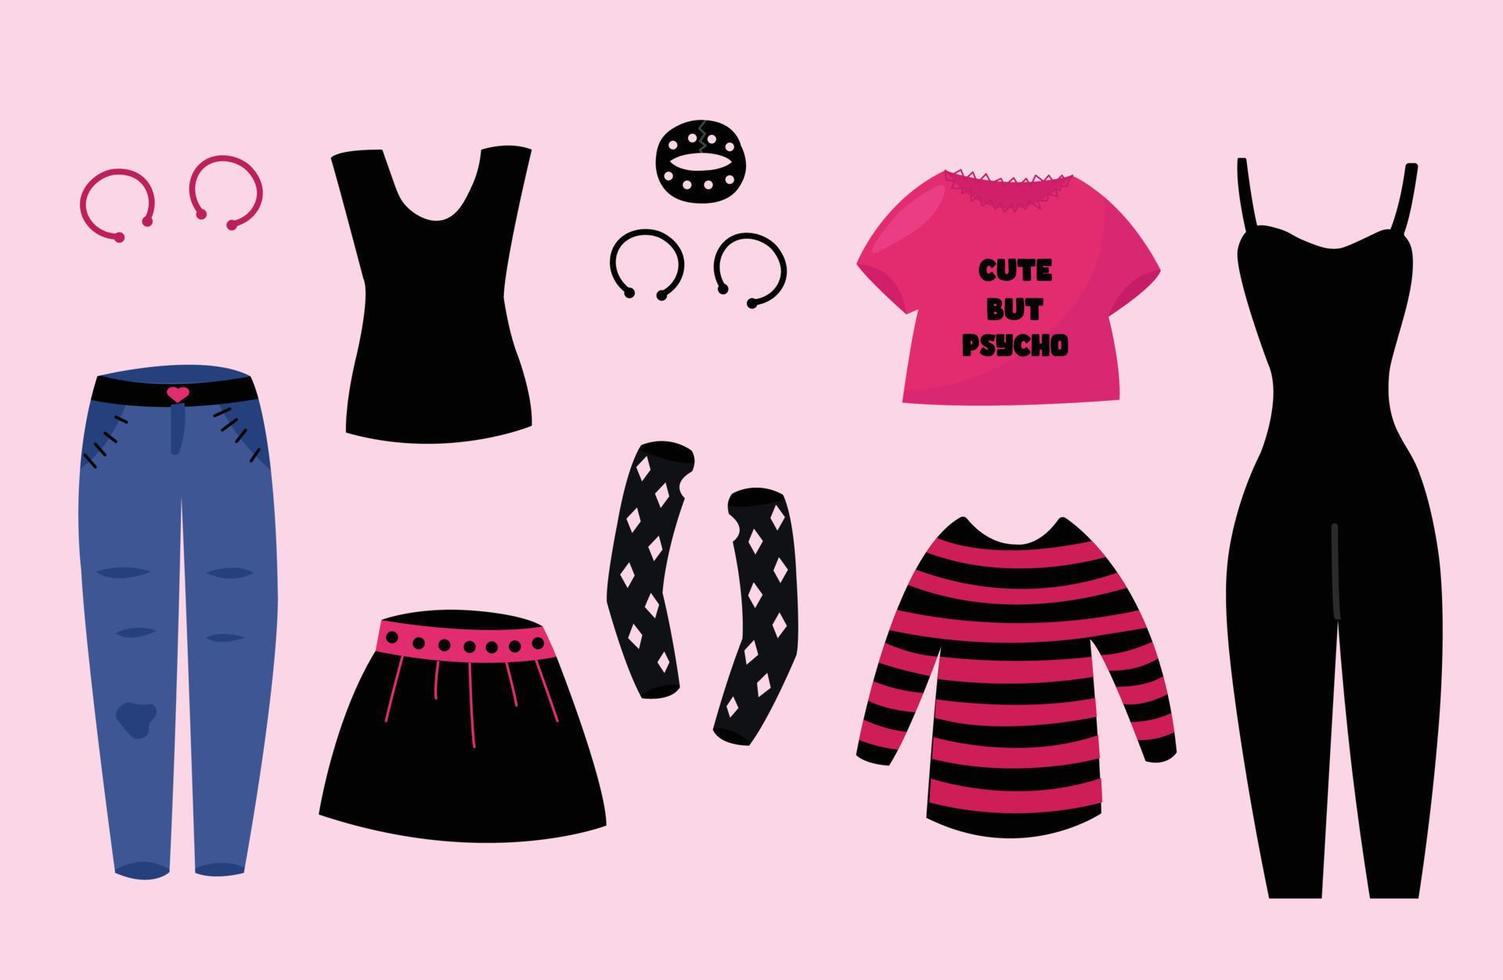 Conjunto de roupas femininas estilo gótico y2k emo. coleção de roupas vintage emo. camiseta, jeans, luvas, saia, suéter, terno. vetor